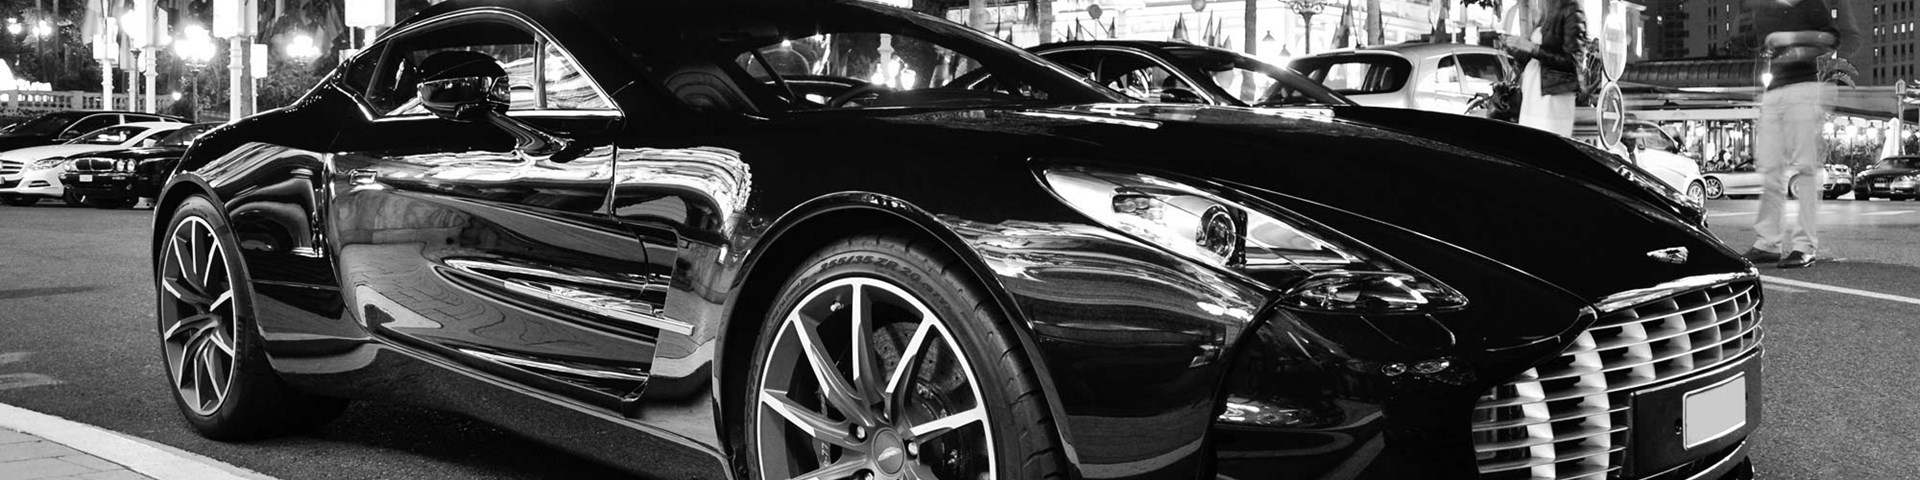 Black and white image of a black Aston Martin in a city centre